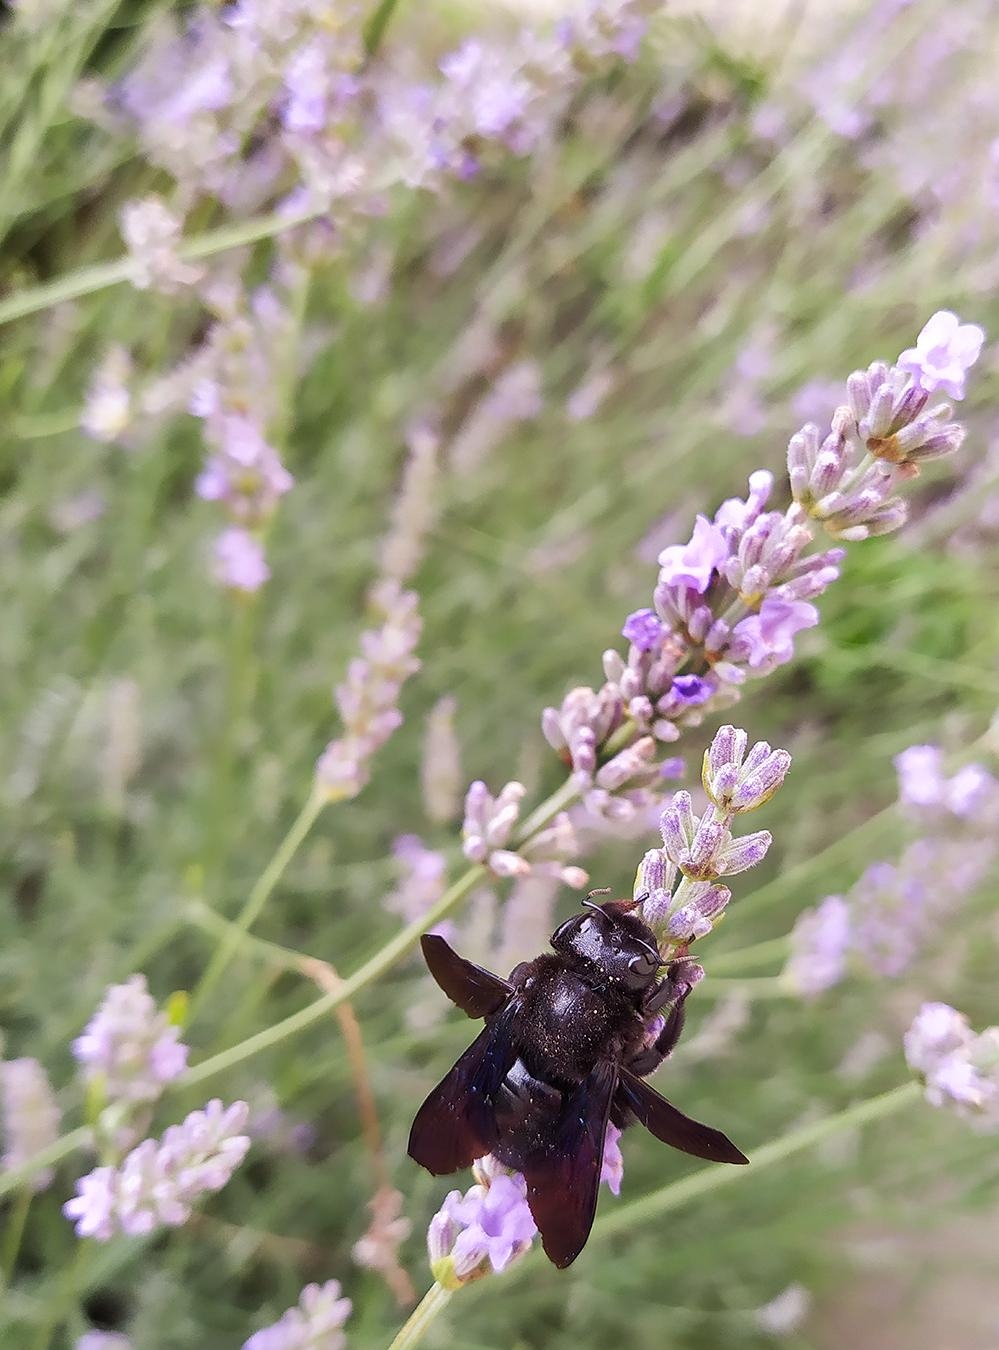 Die seltene, große, blaue Holzbiene in unserem Garten❣️
#outdoorweek #gartenliebe #lavendel #holzbiene #garten